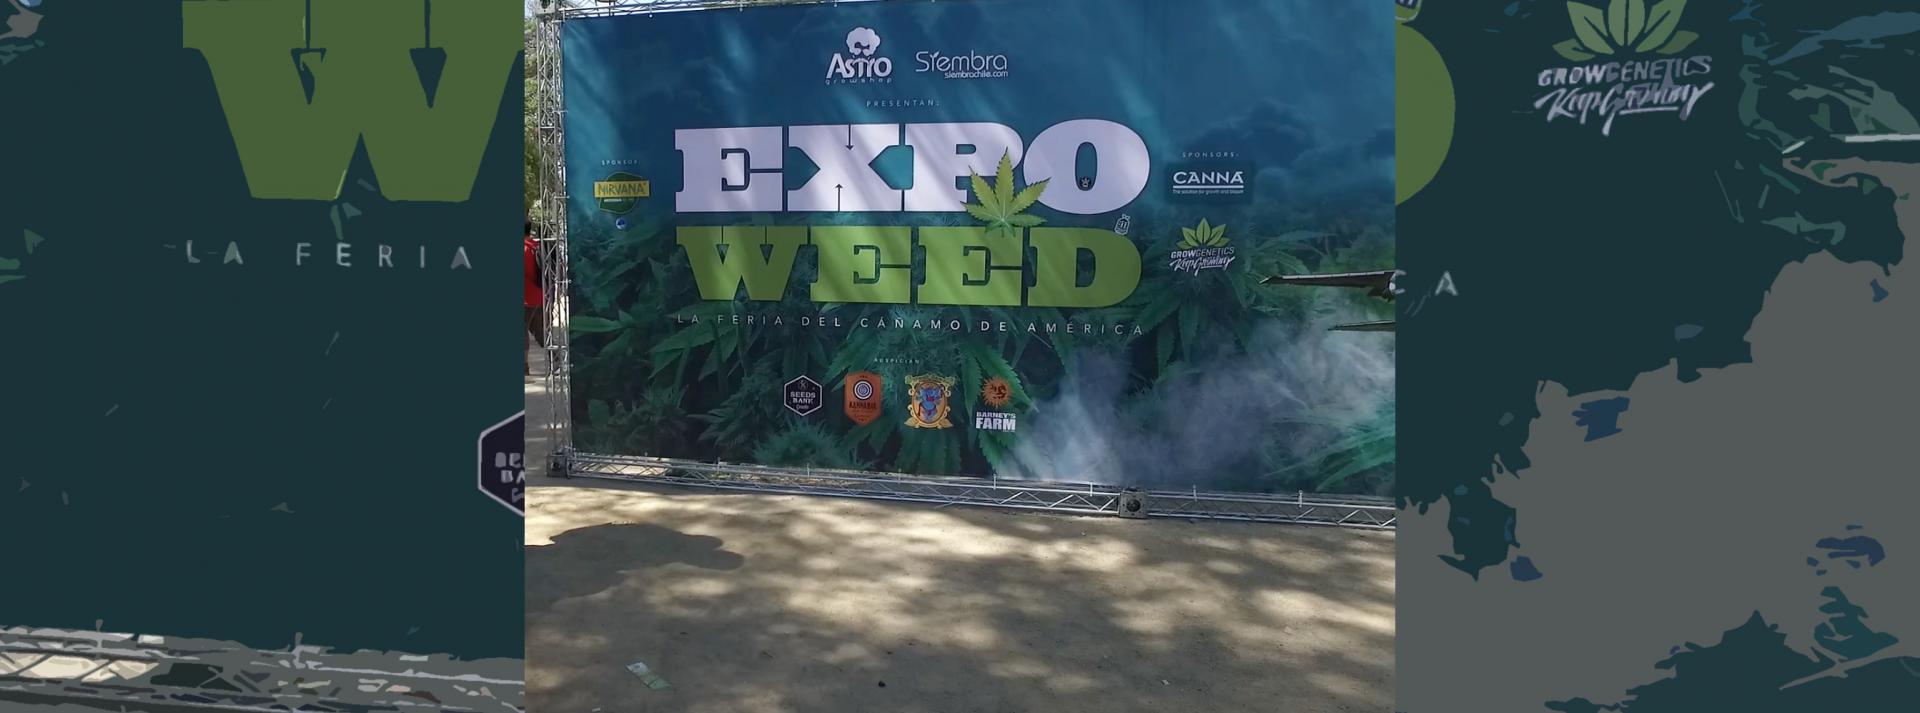 We went to Expoweed in Santiago de Chile